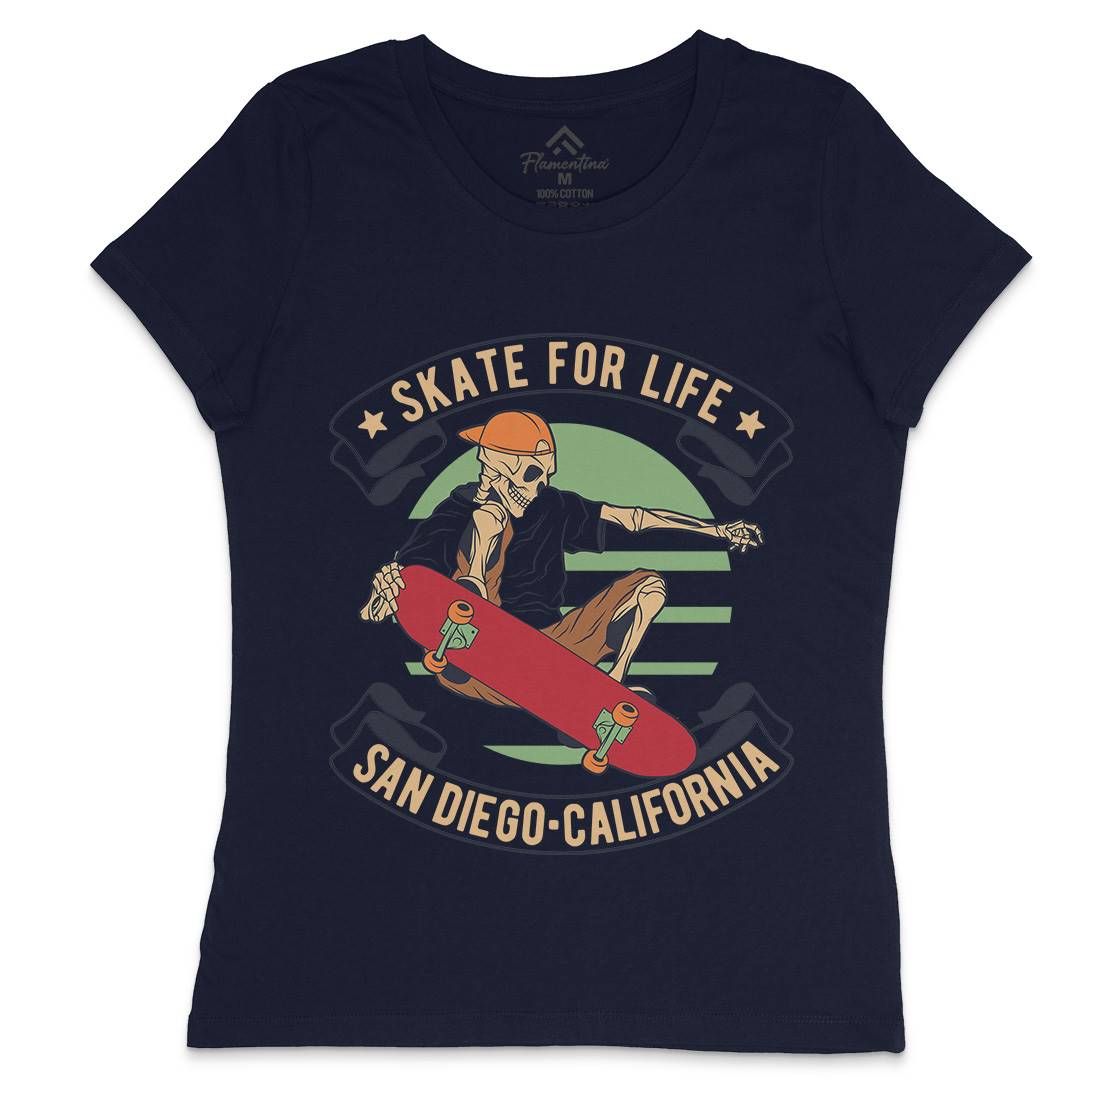 For Life Womens Crew Neck T-Shirt Skate D970